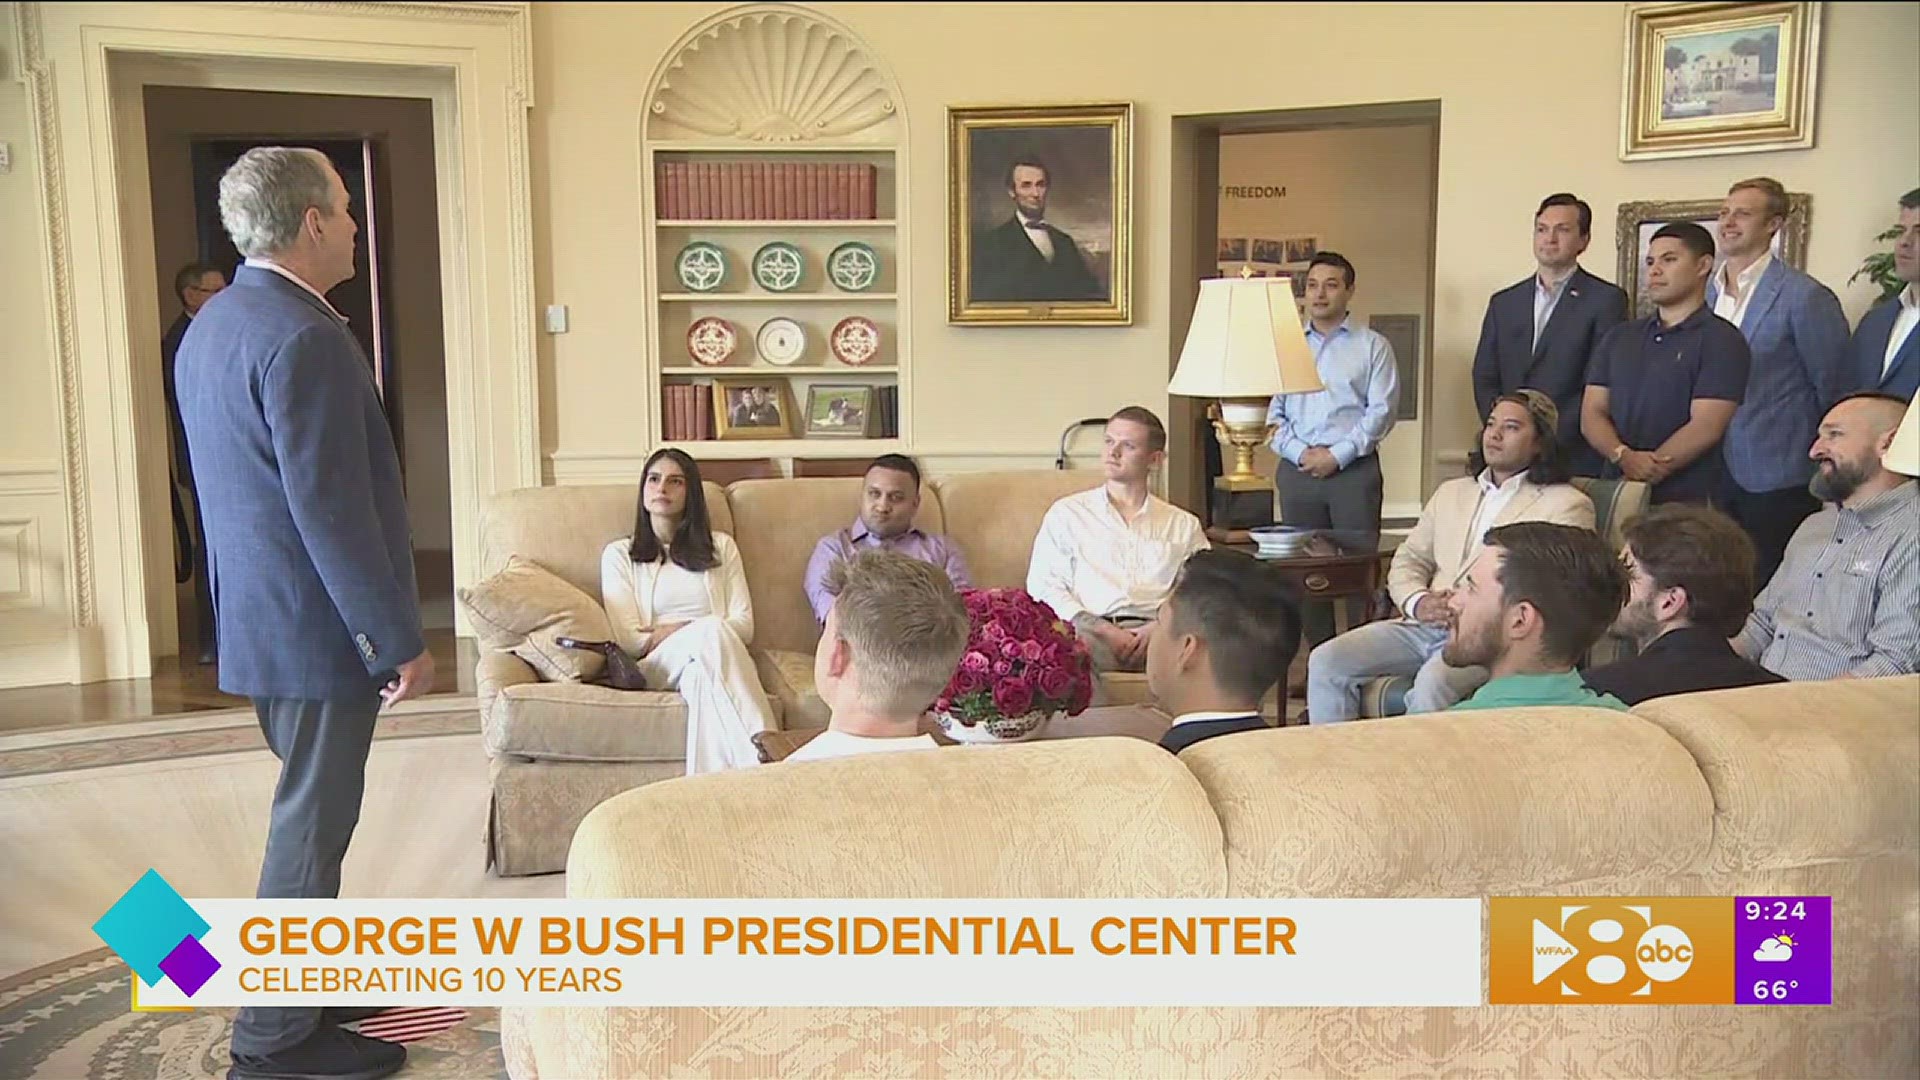 The George W. Bush Presidential Center celebrates its 10th Anniversary